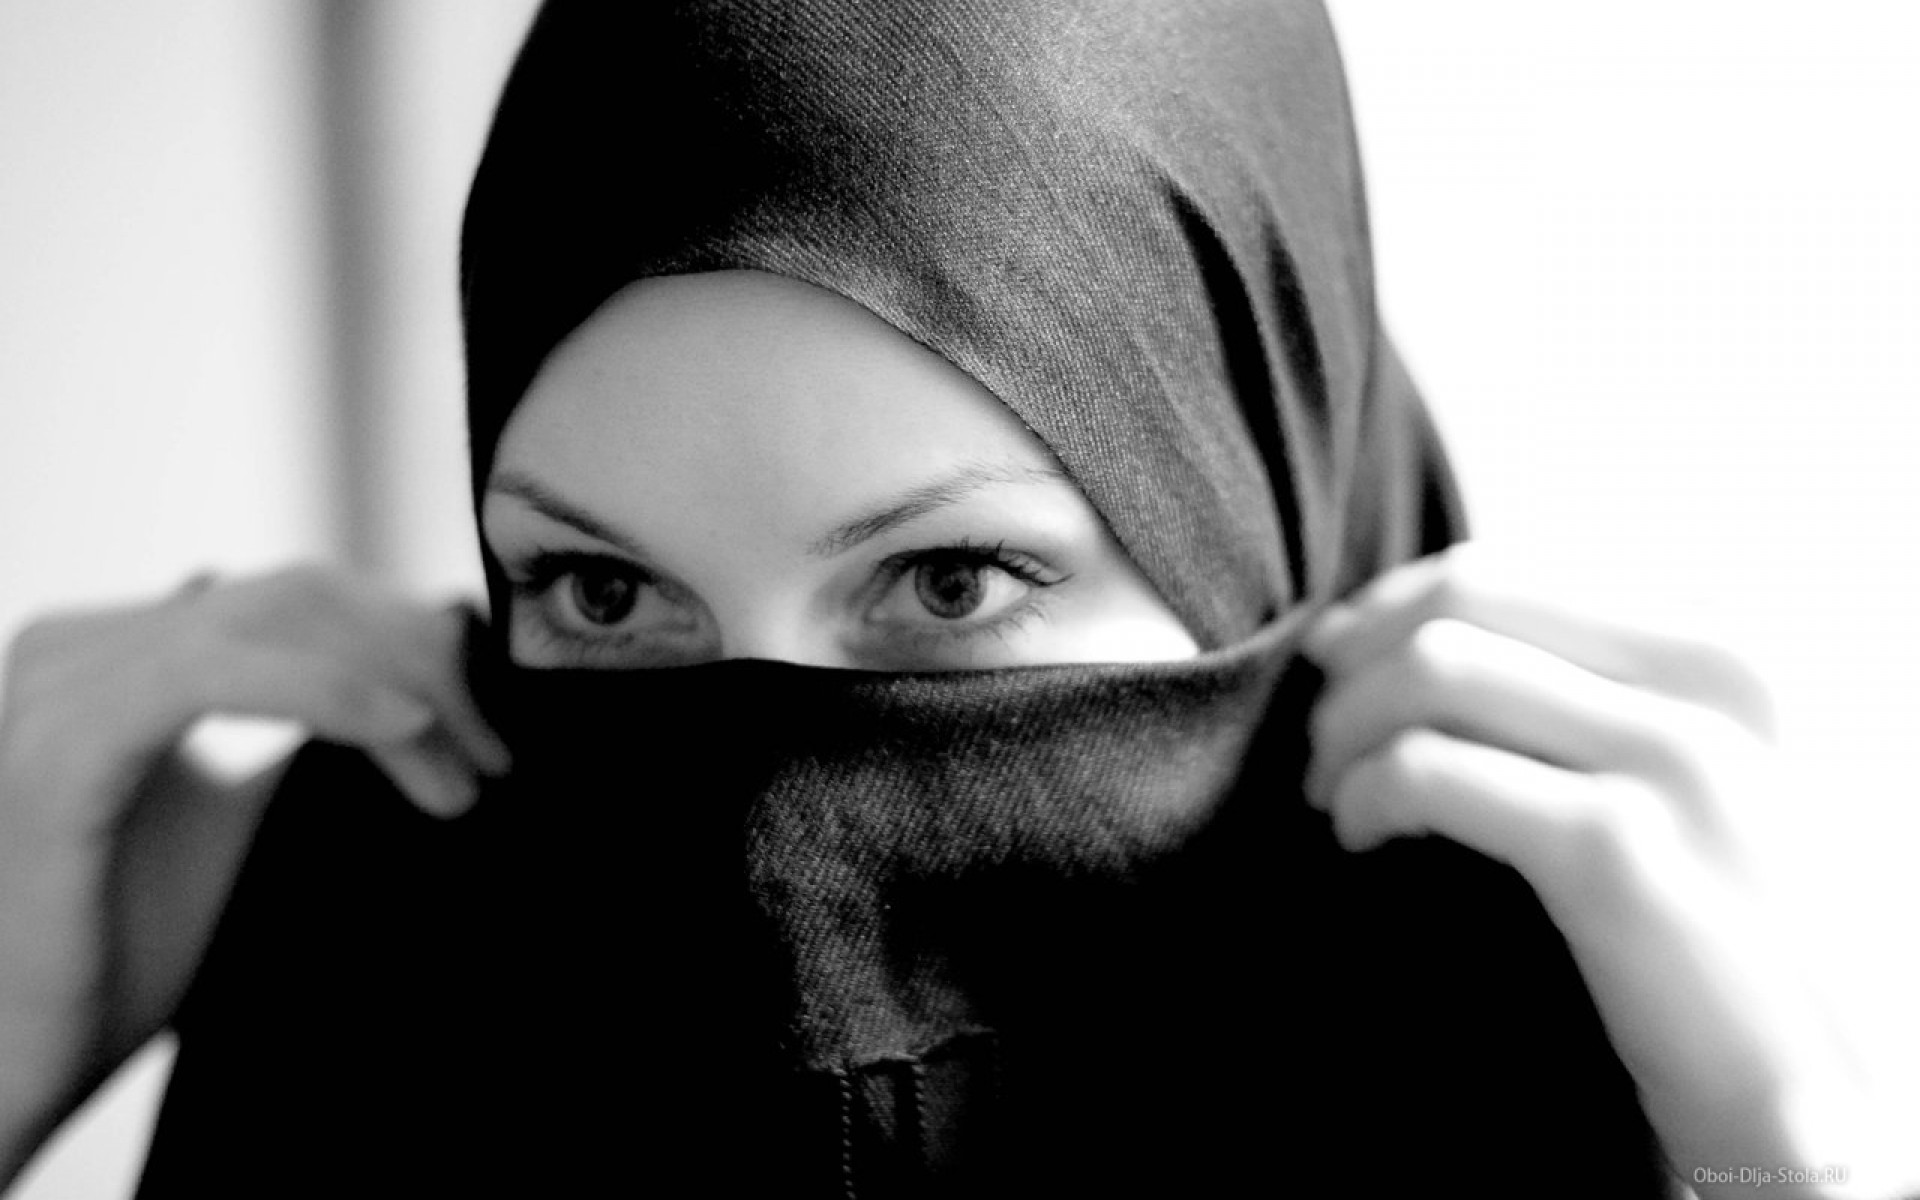 Я мусульманка. Ксения Селимова Дербент. Женщина в хиджабе. Девушка в парандже. Девушка мусульманка.